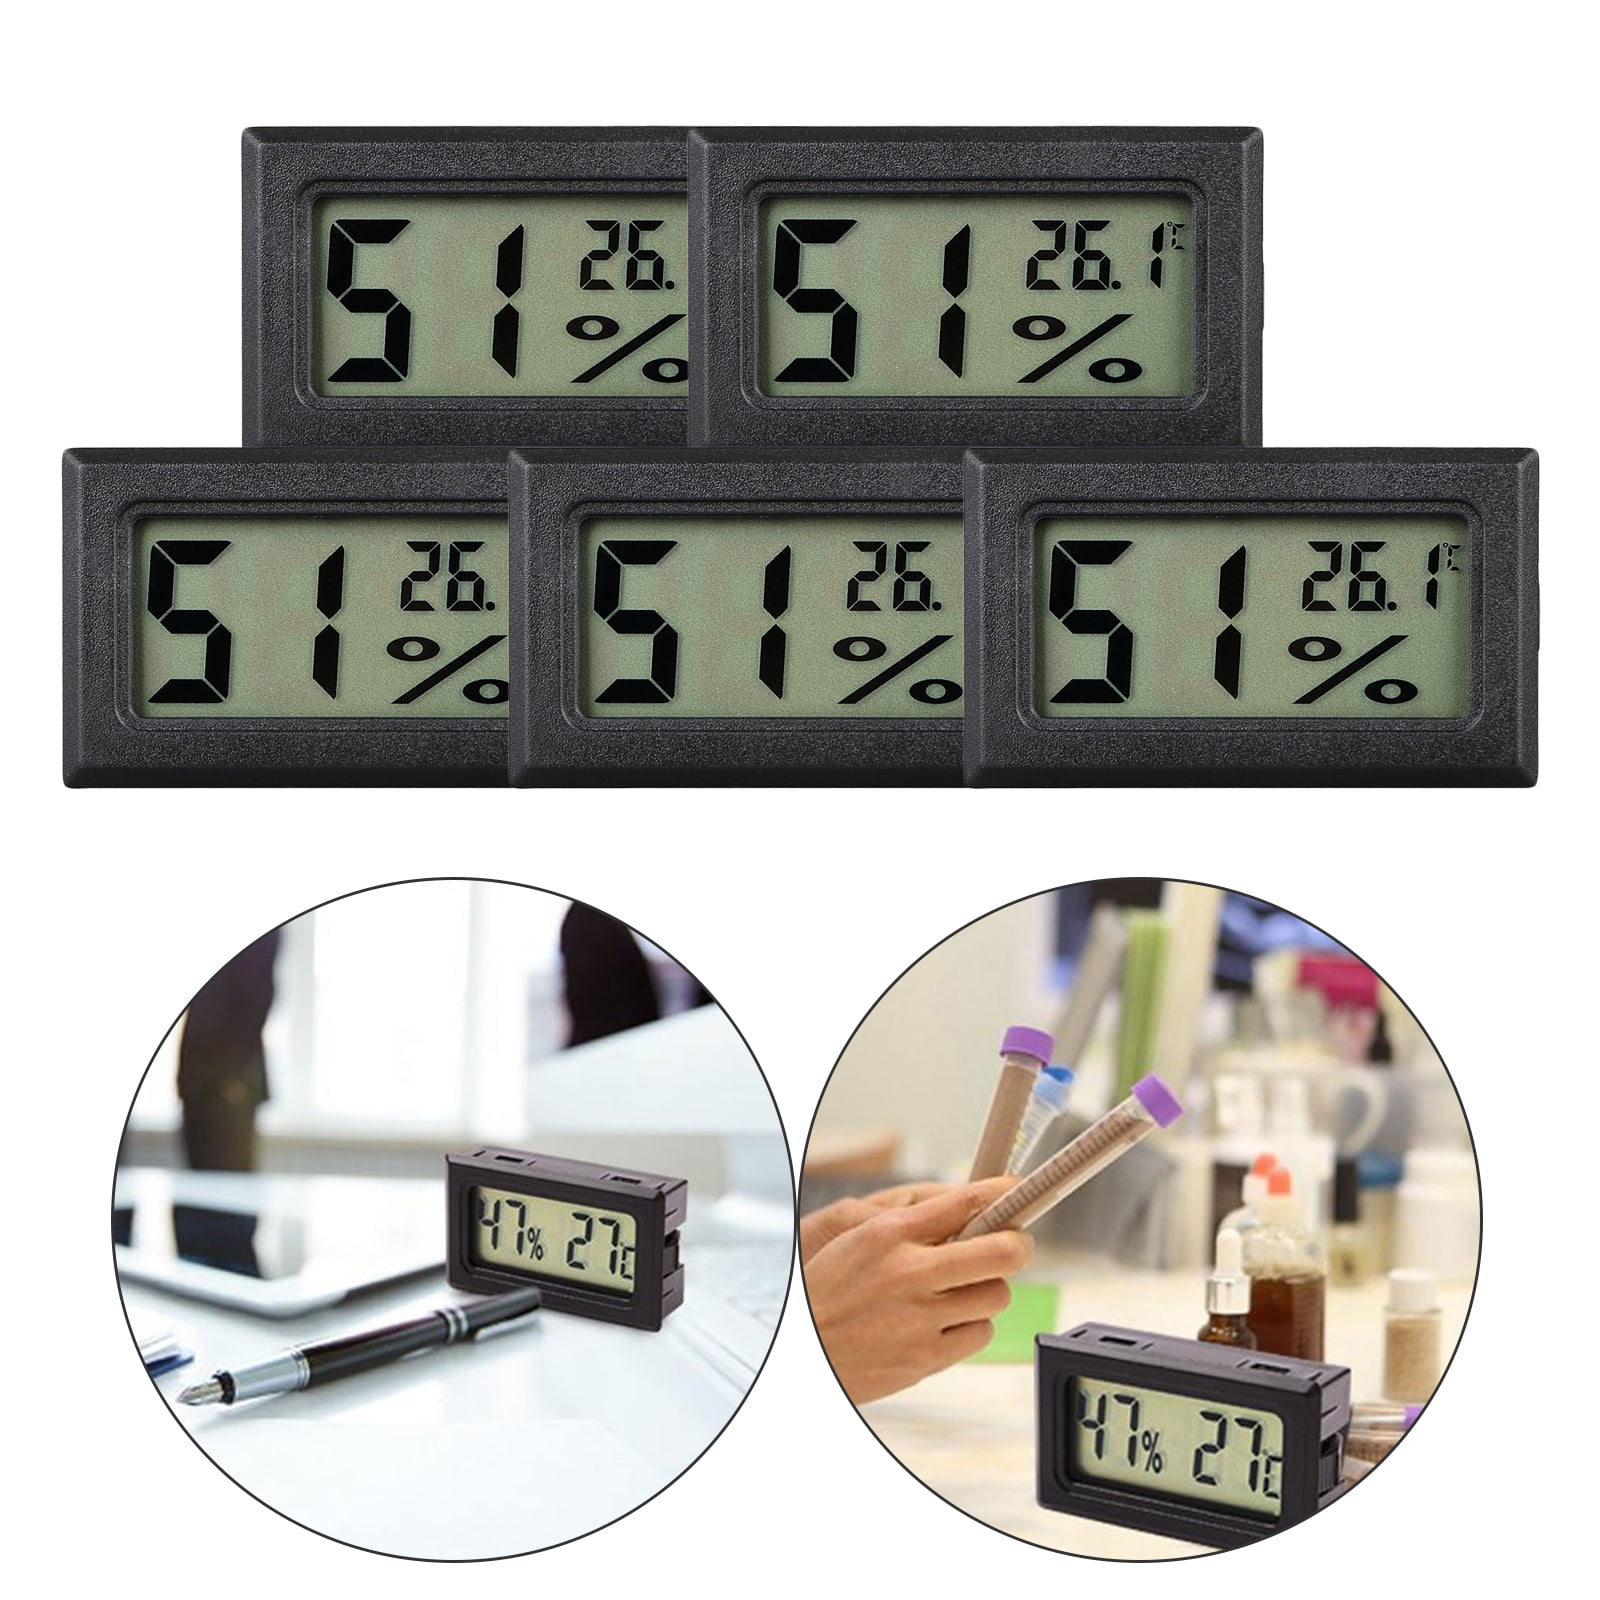 Momongel Mini Digital LCD Indoor Temperature Humidity Meter Thermometer Hygrometer Gauge